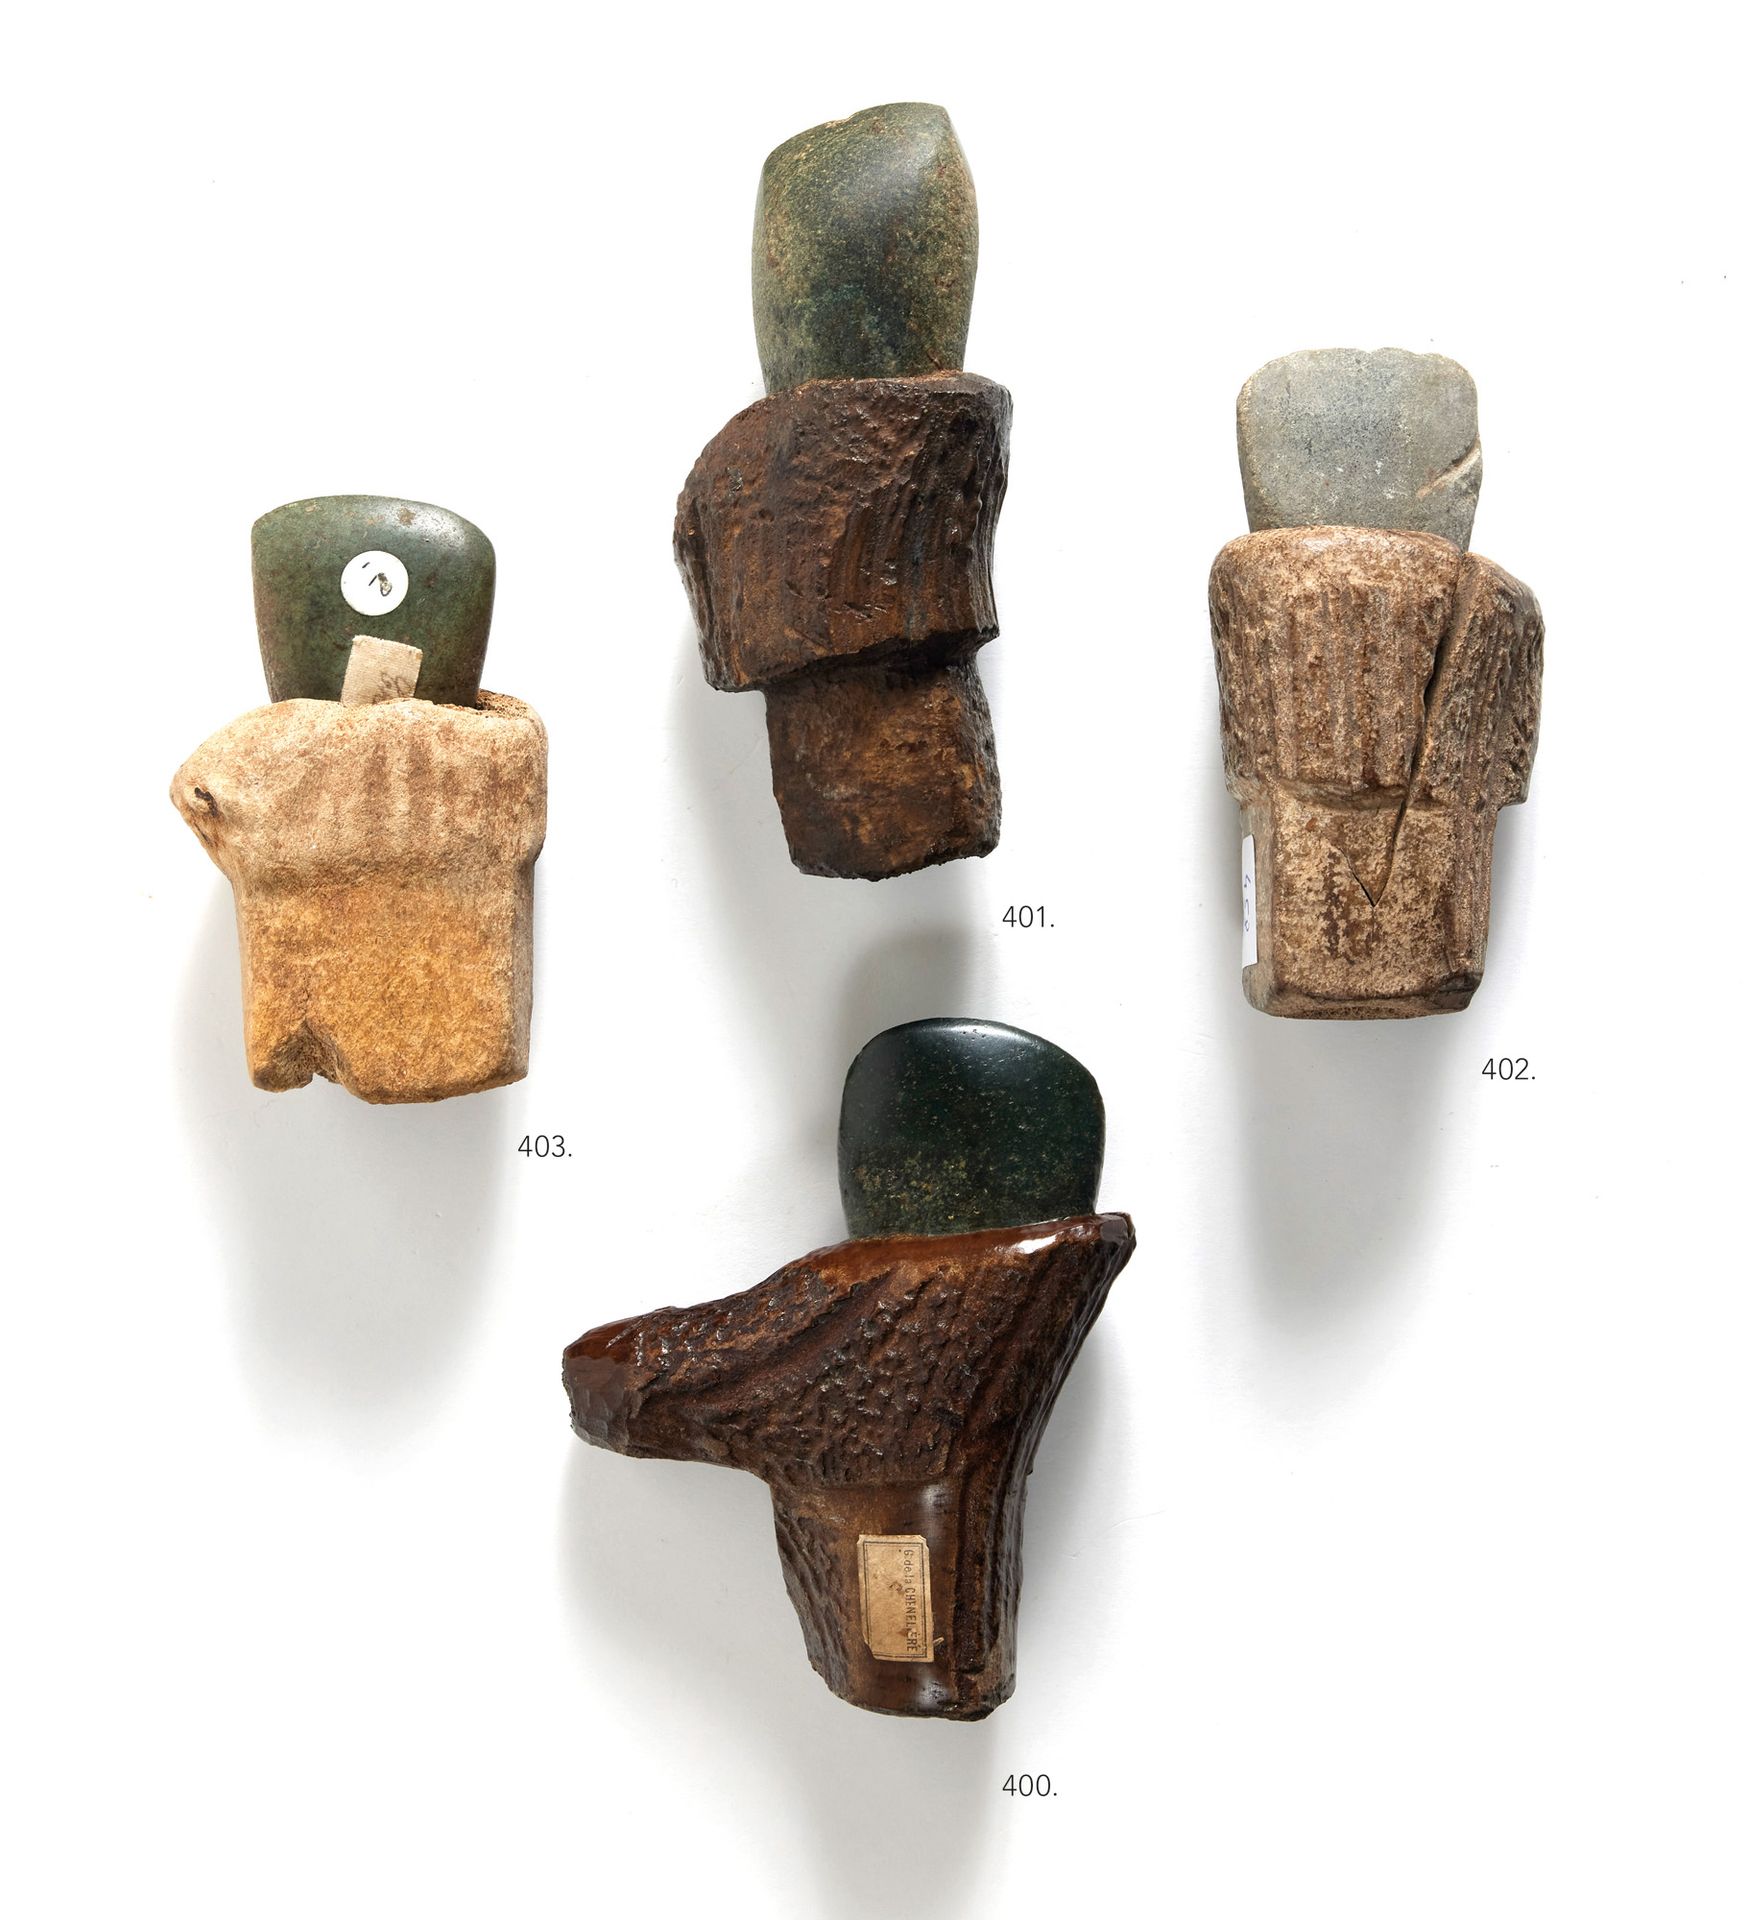 HACHE 斧头

抛光后的鞋跟和它的手柄都有轻微的凹痕。

灰色石头和鹿角。

瑞士，新石器时代晚期。

l.11厘米

旧标签显示 "Locras"。